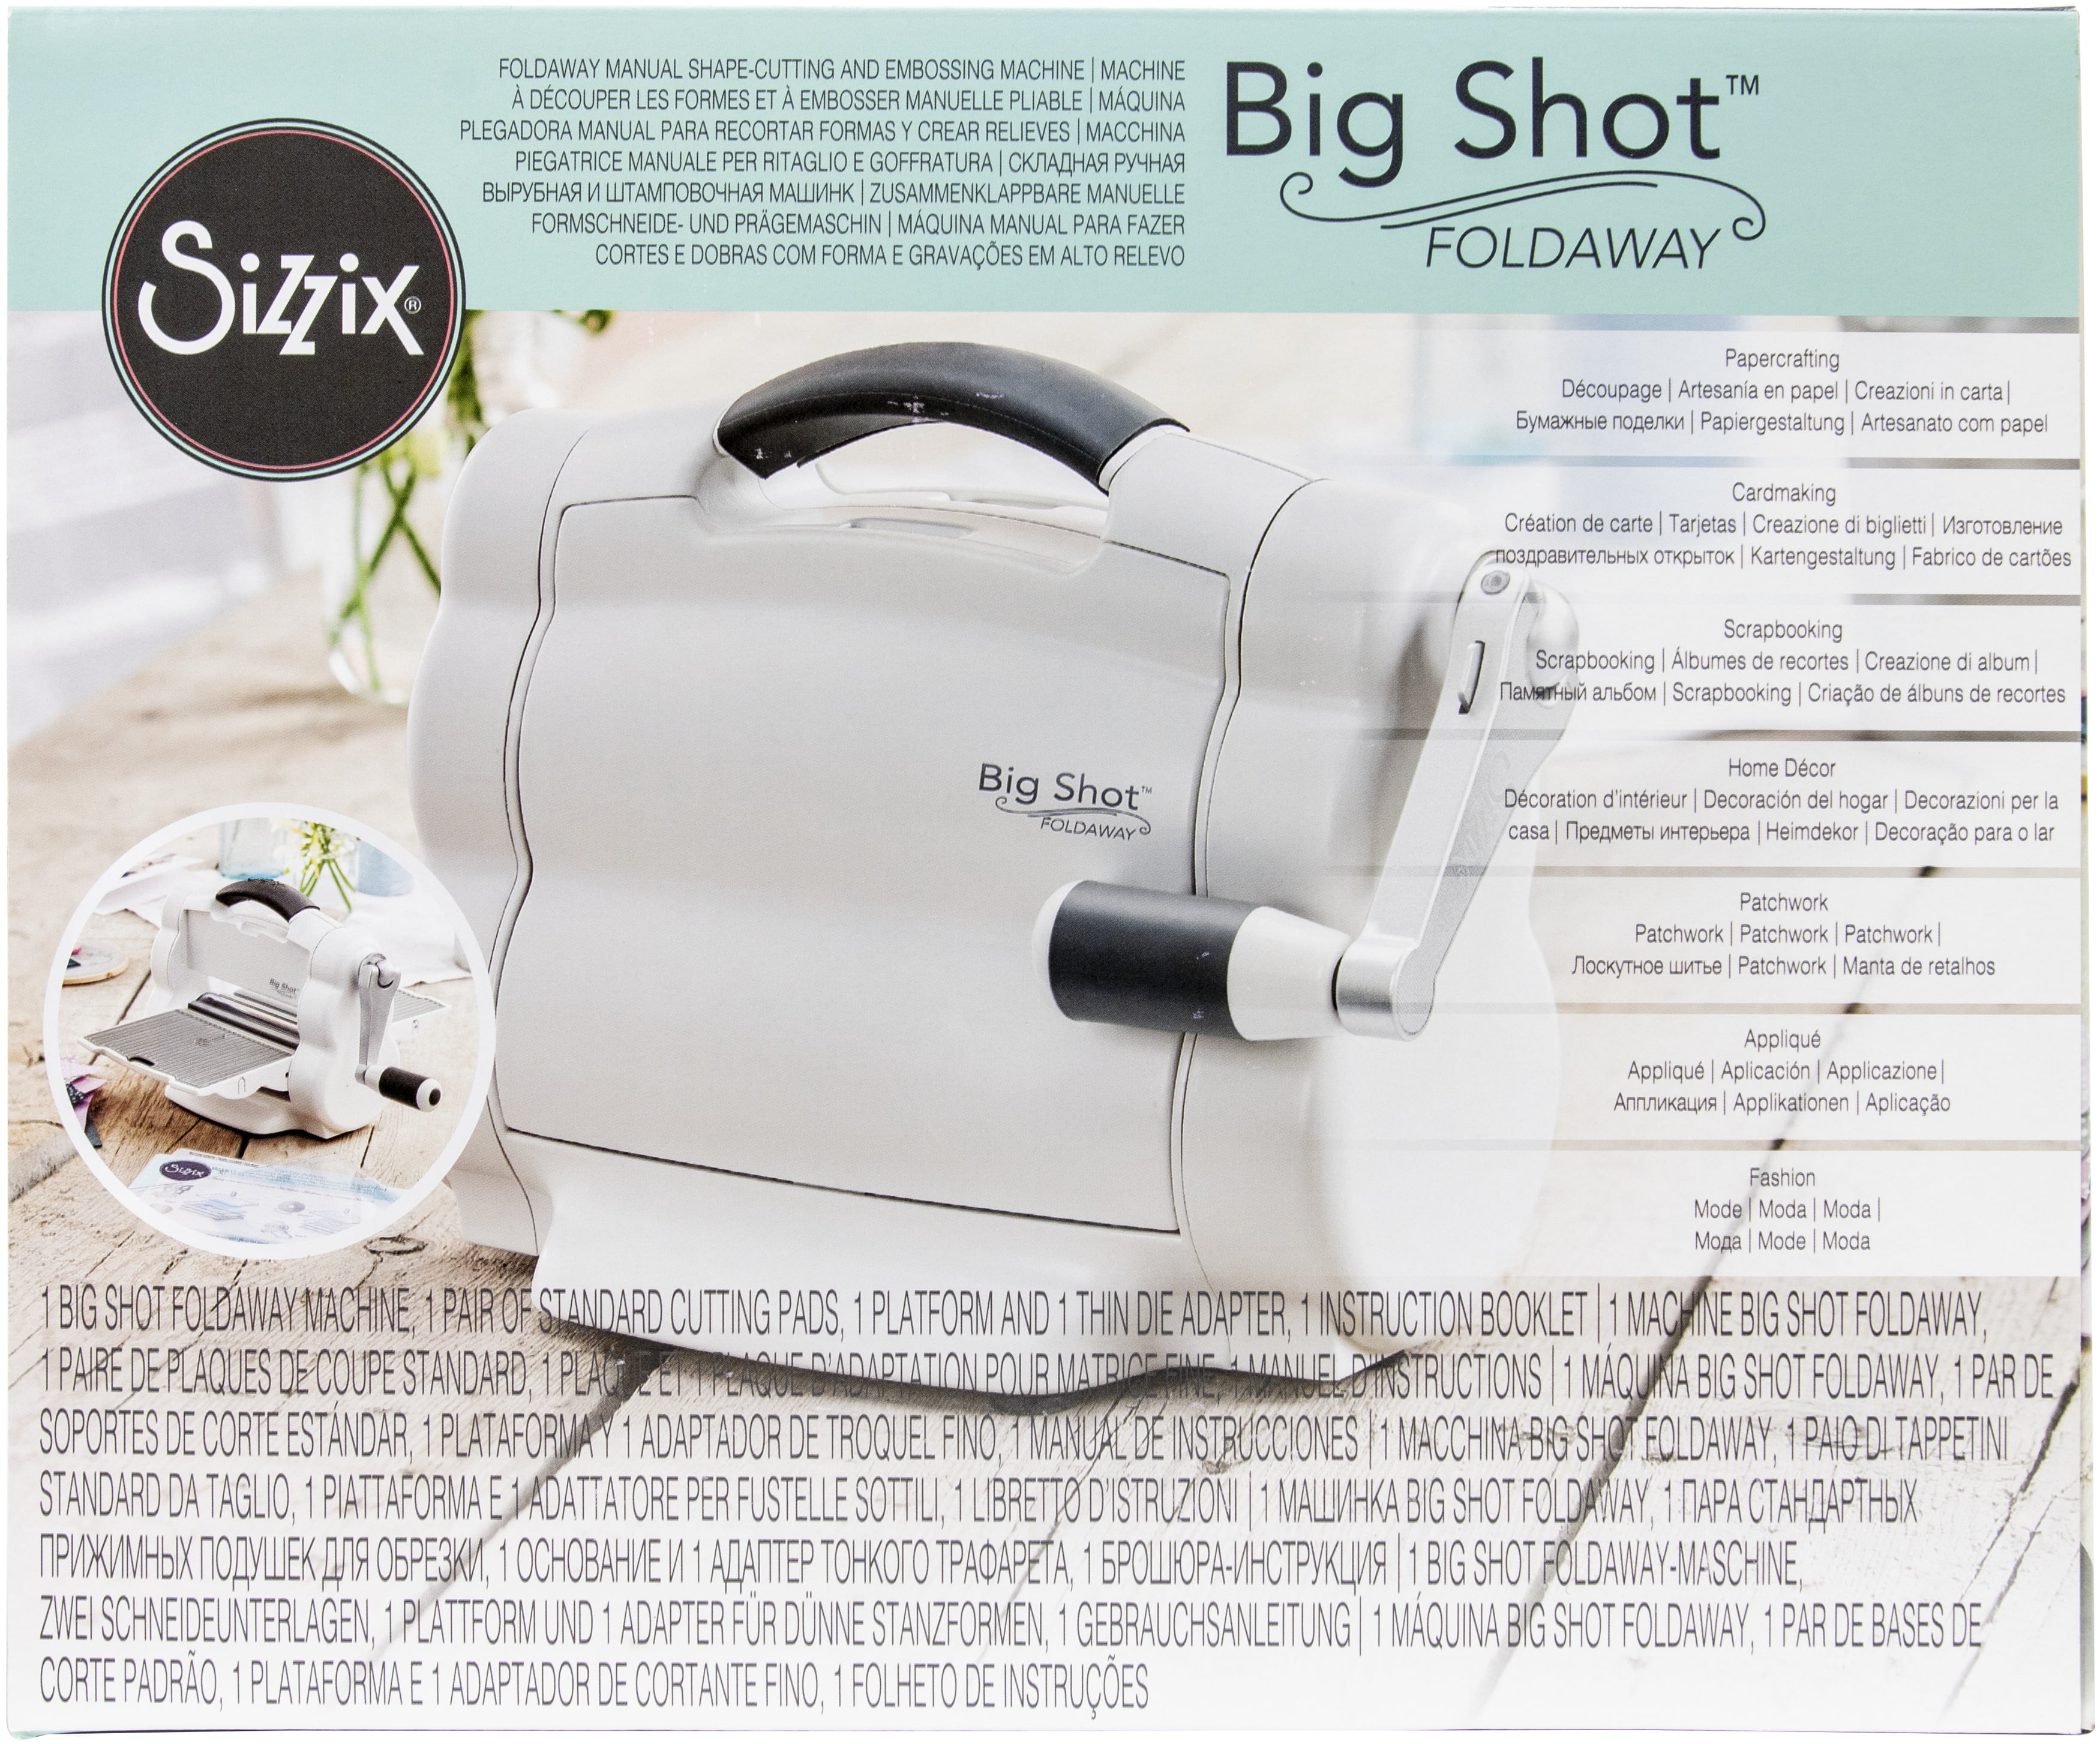 Sizzix Big Shot Foldaway Machine Only 